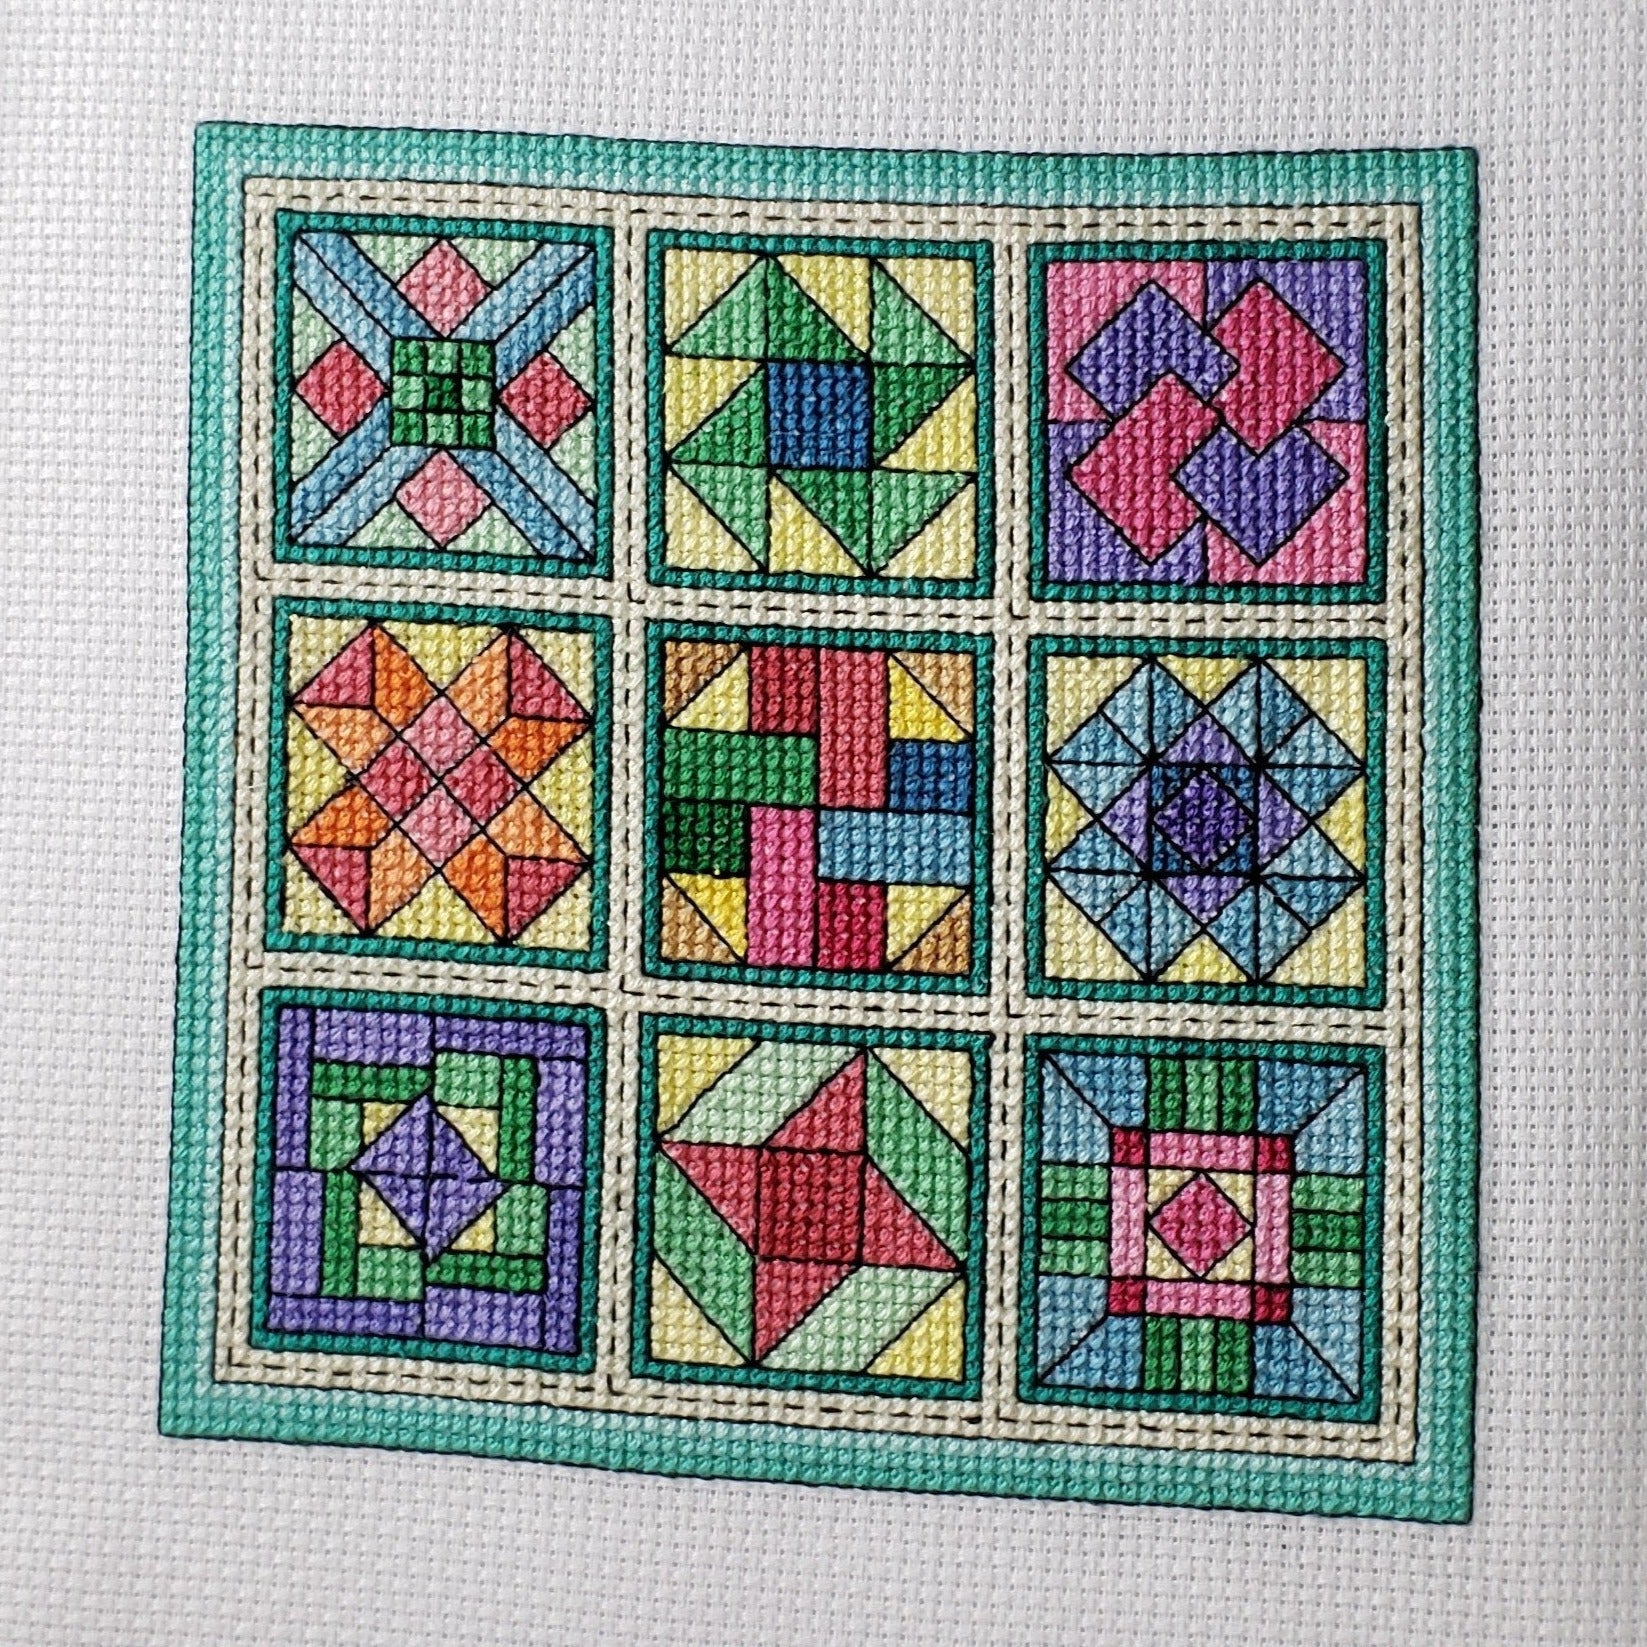 Kaleidoscope / Quilt Blocks 4 - Cross Stitch Pattern